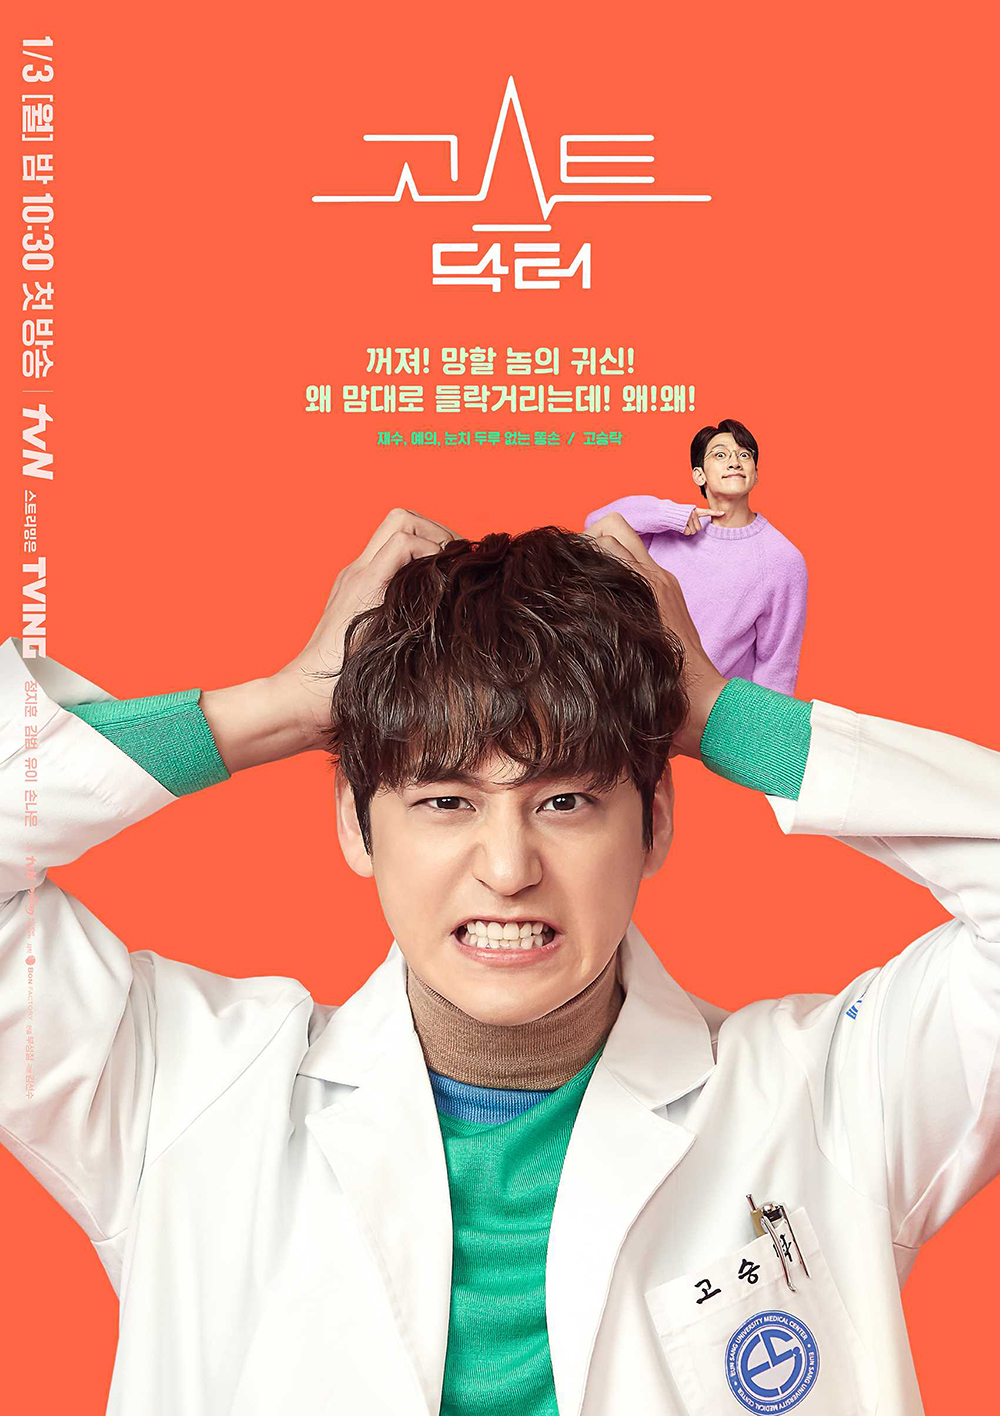  tvN 월화드라마 '고스트 닥터(Ghost Doctor)'